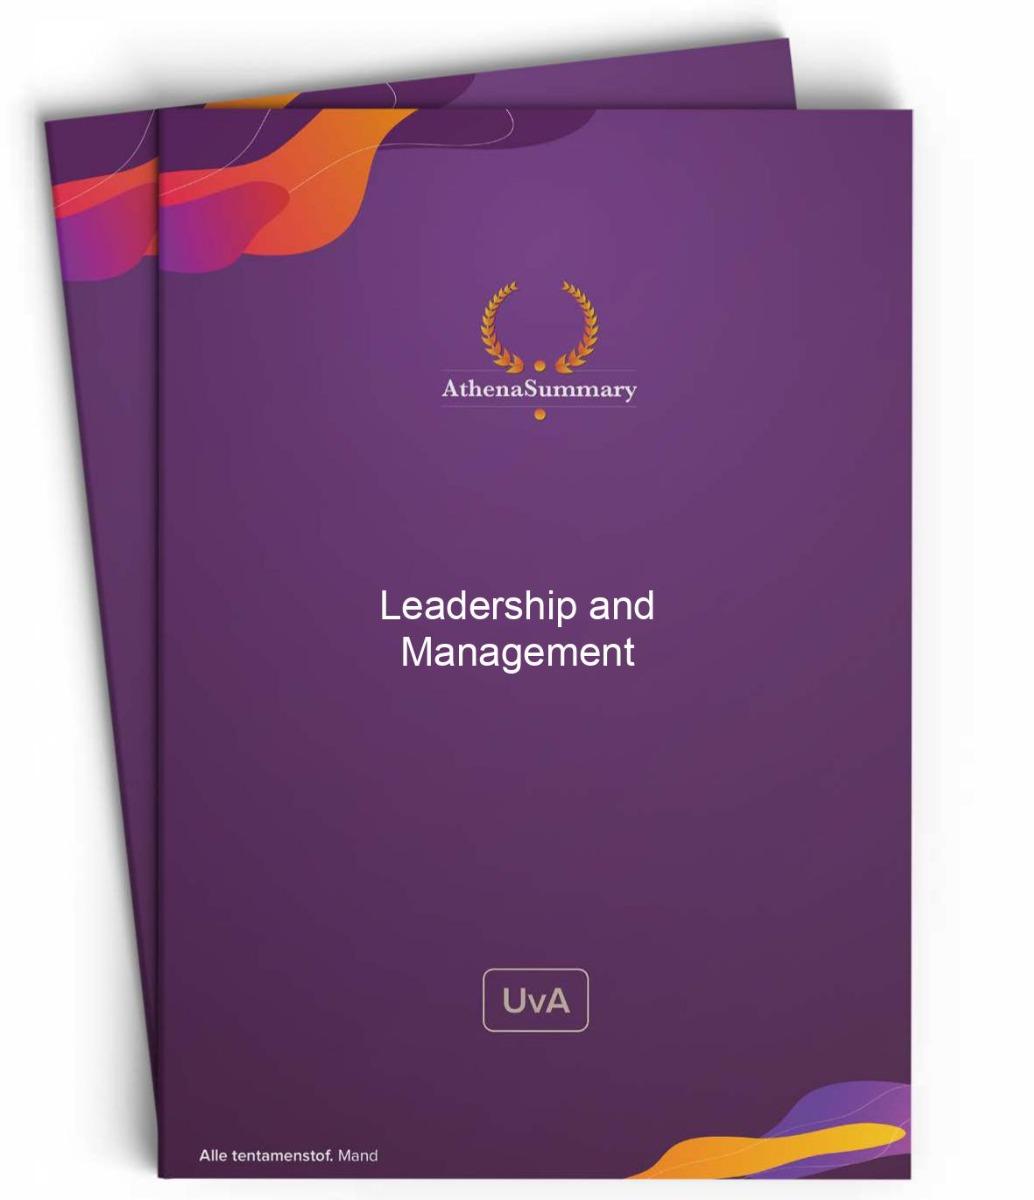 Literature Summary: Leadership and Management